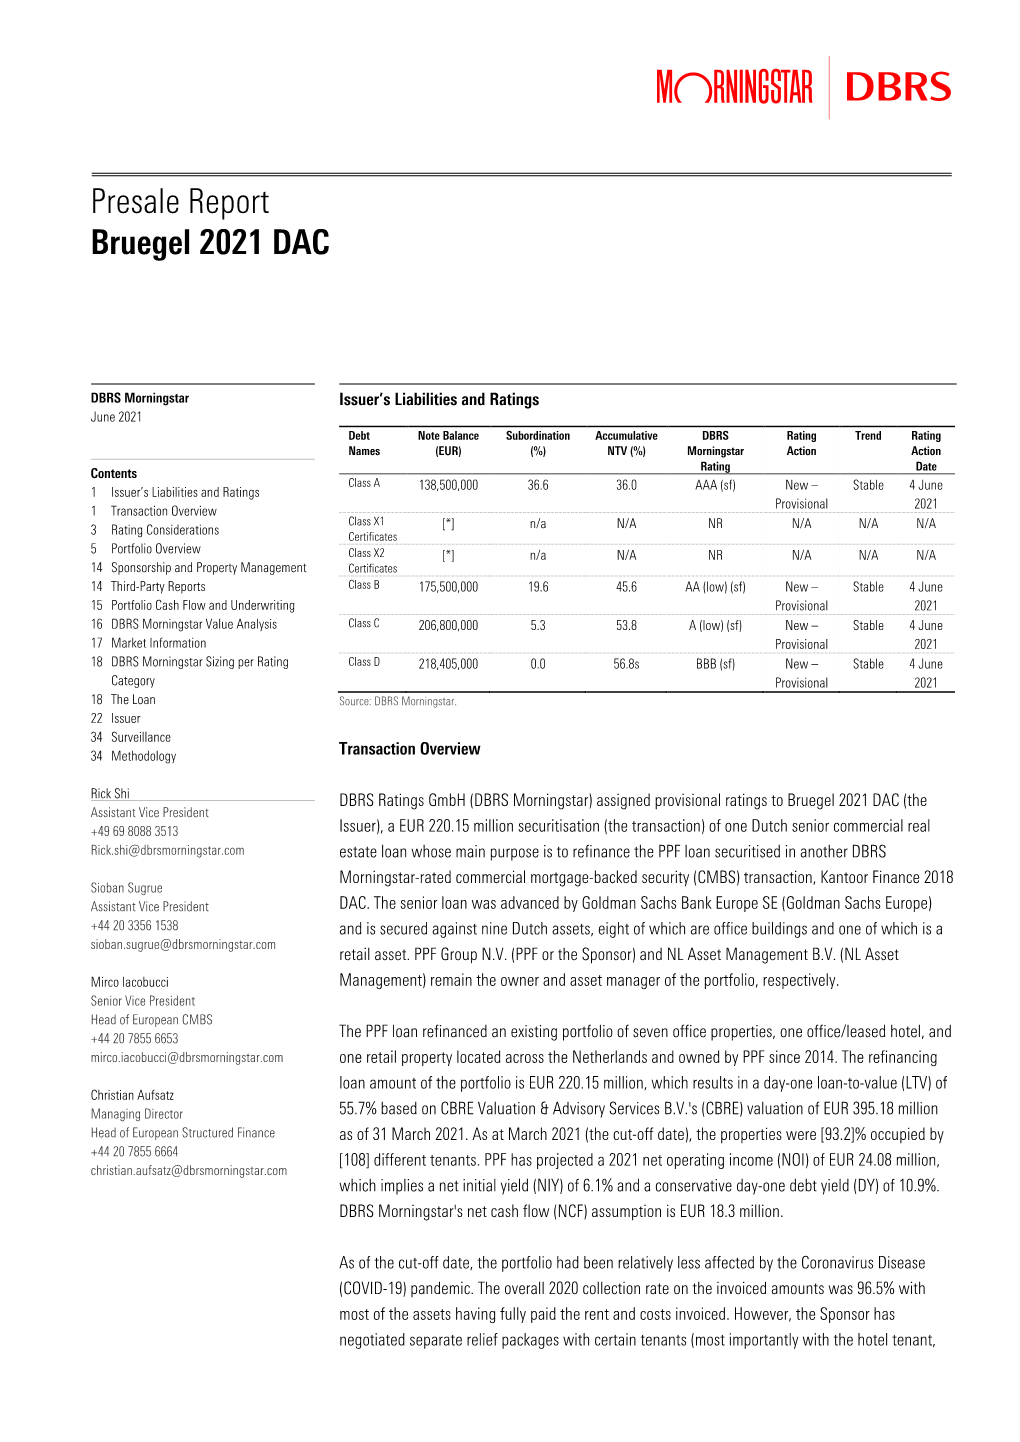 Presale Report Bruegel 2021 DAC